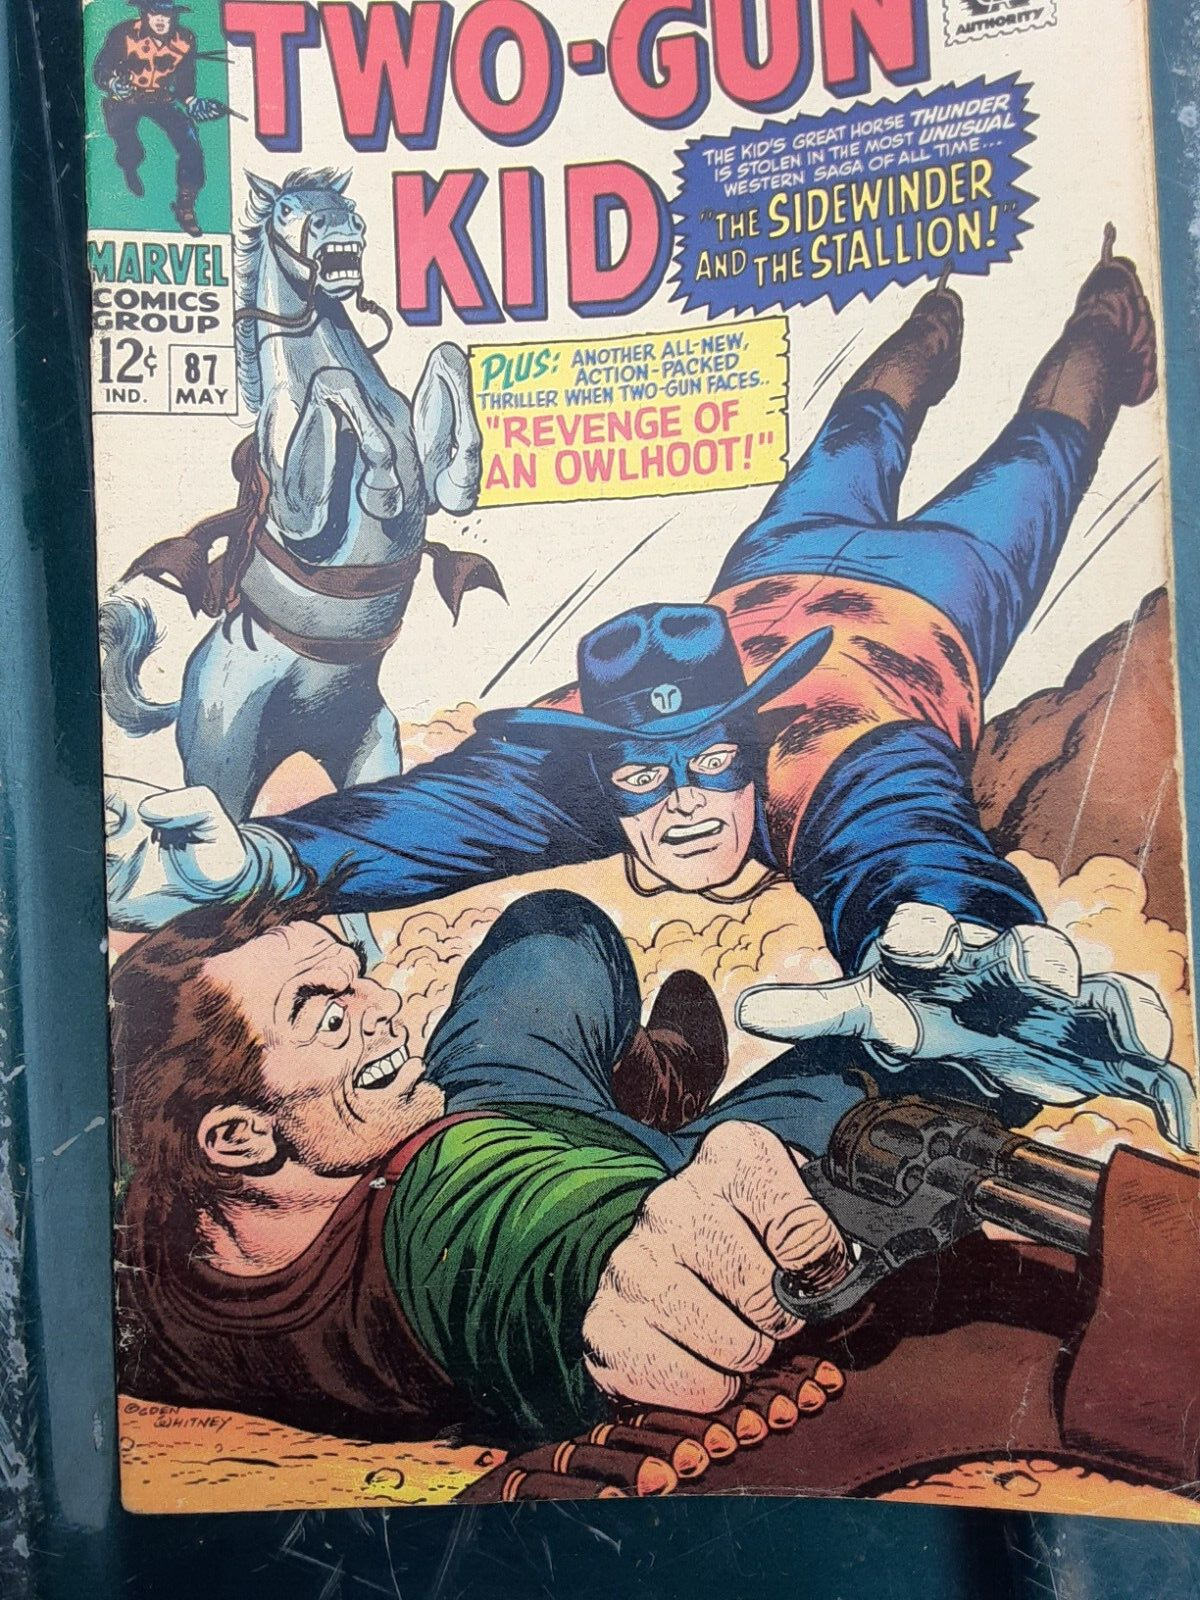 Two-Gun Kid #118 - The Two-Gun Kid\'s great horse Thunder is stolen